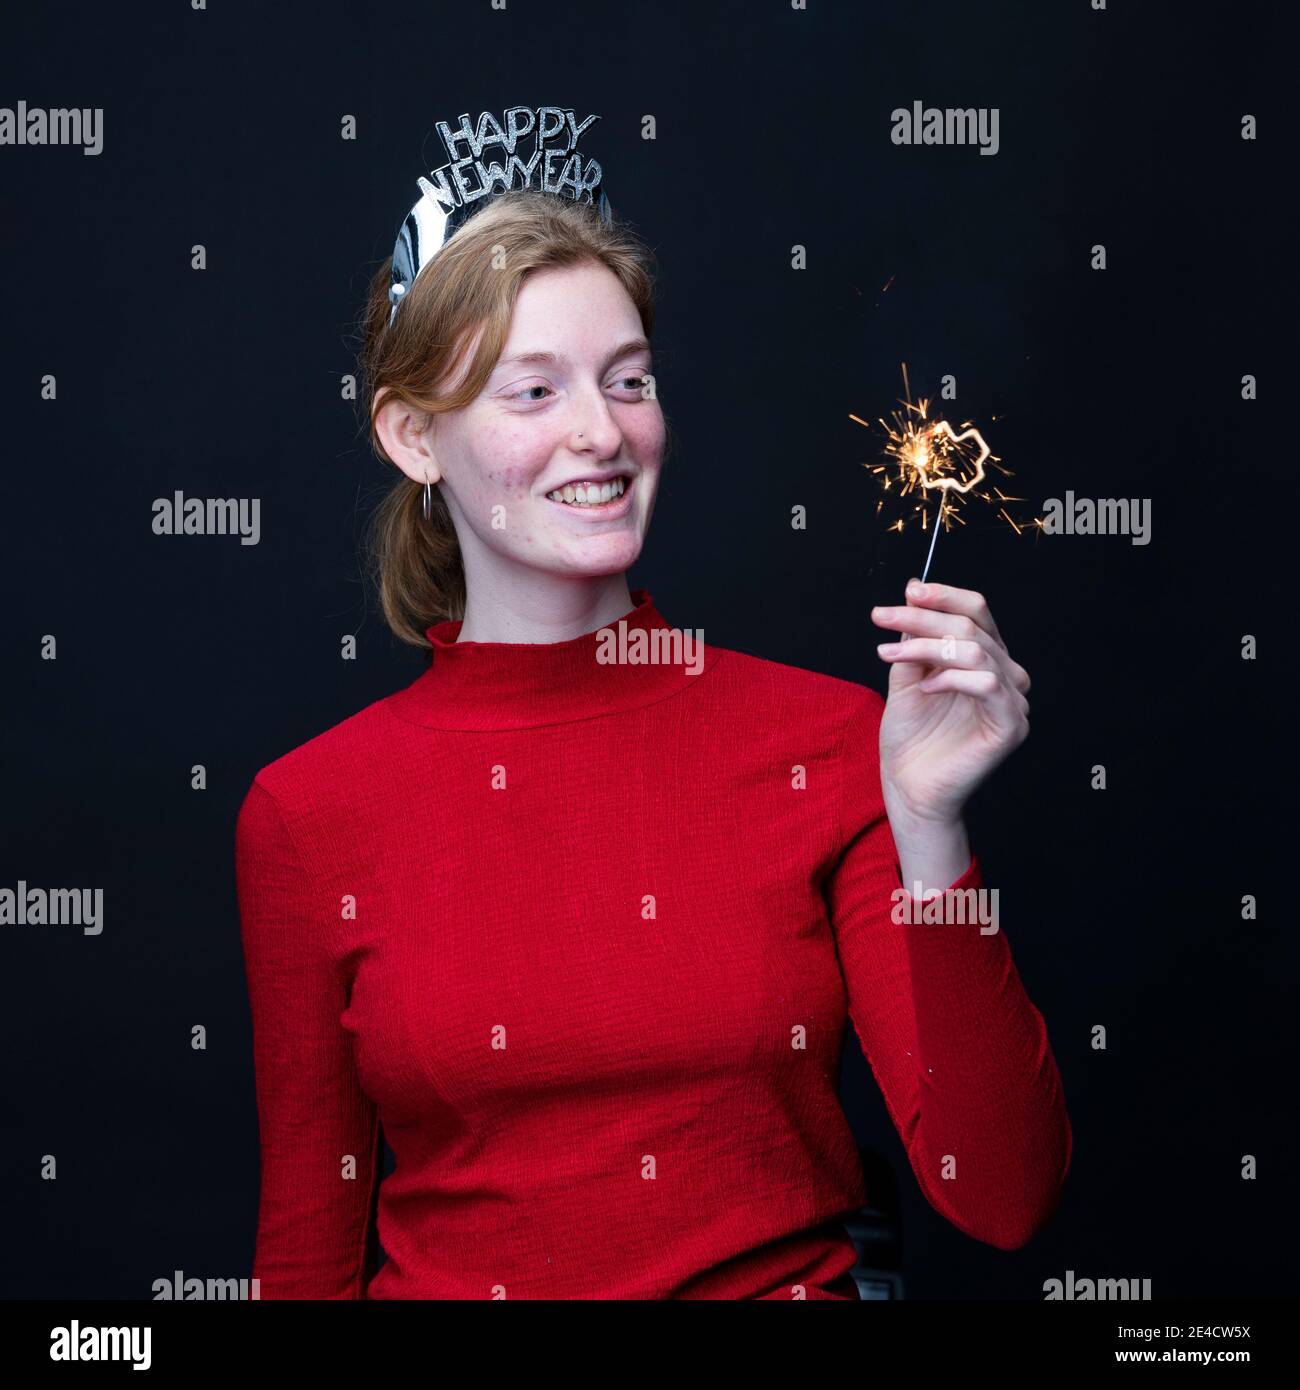 Woman celebrating New Years Eve Stock Photo